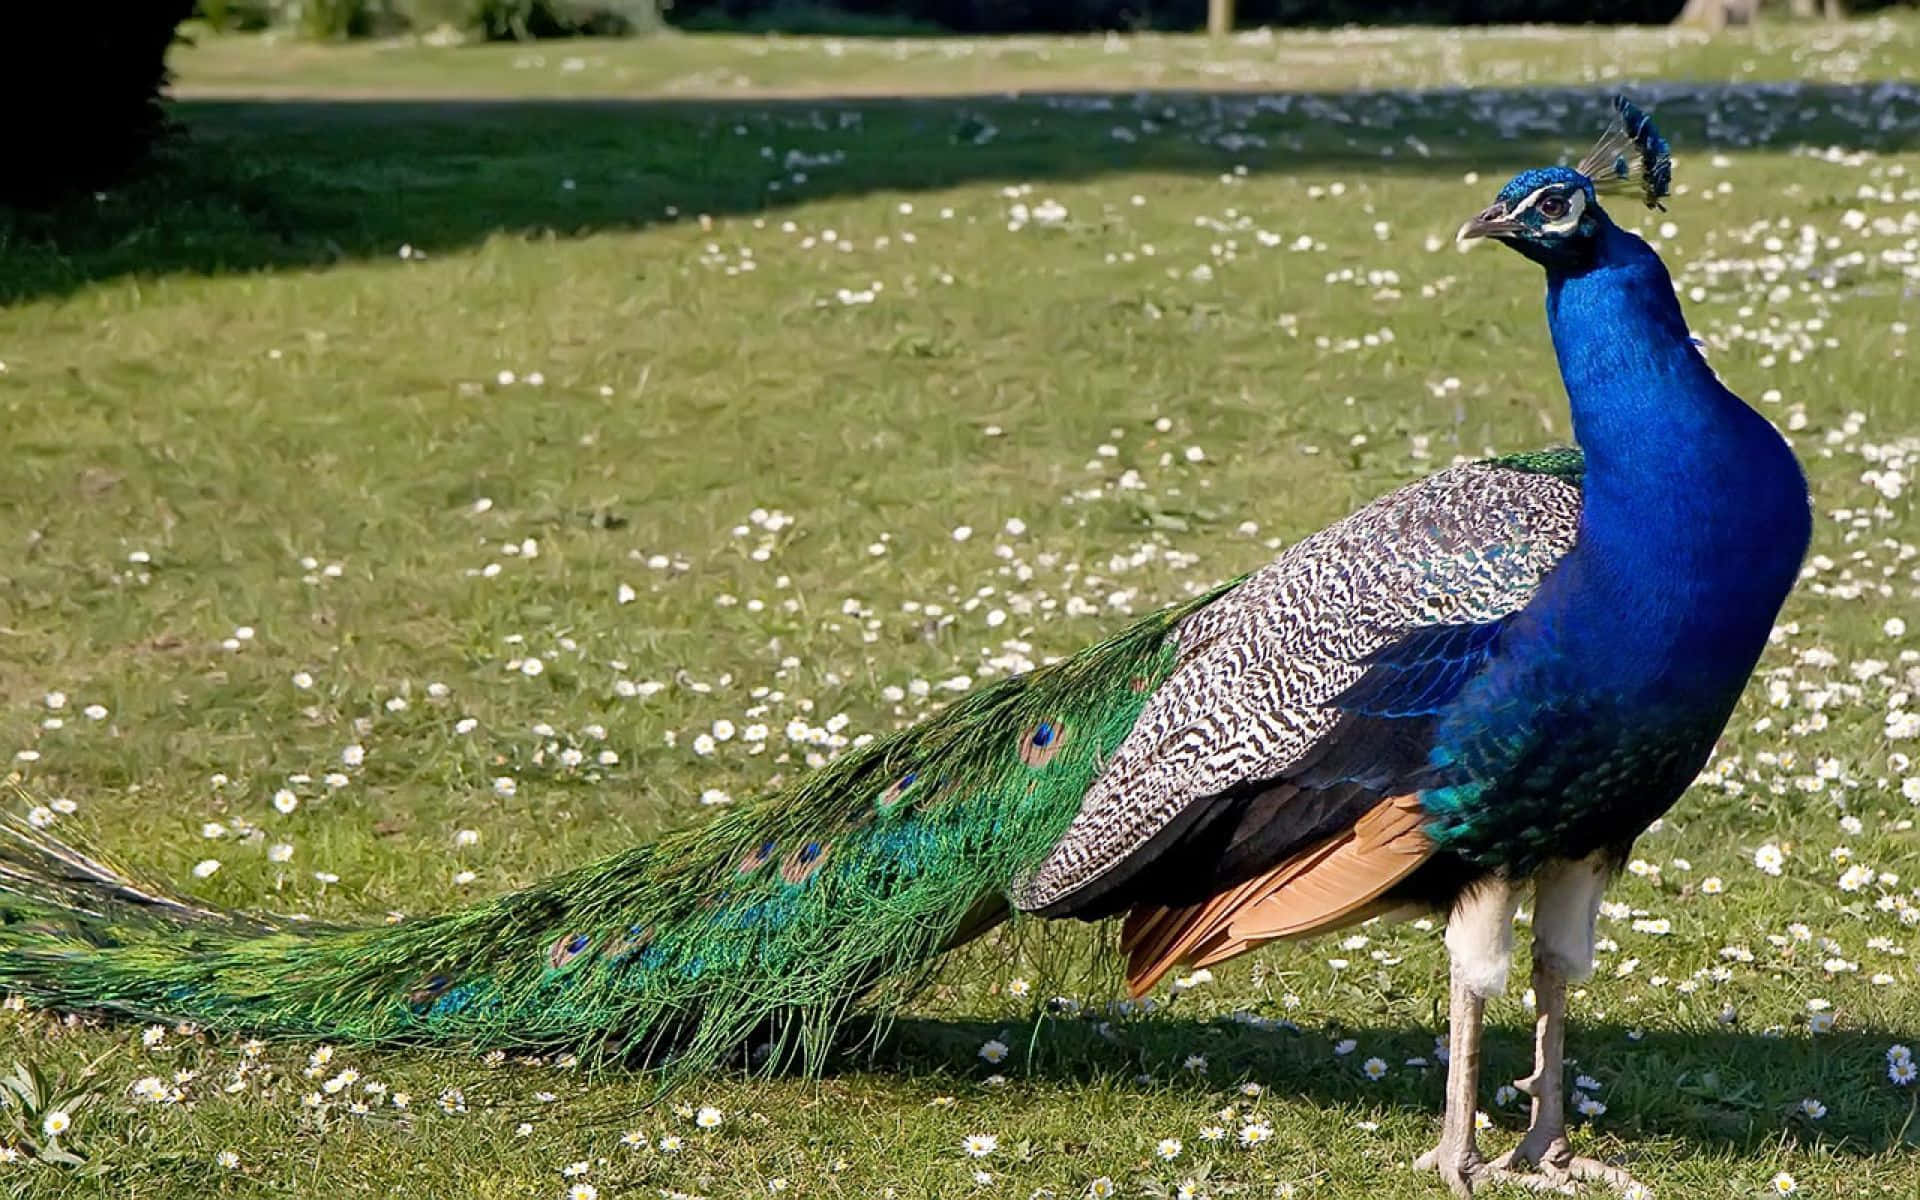 Colorful Peacock in Its Natural Habitat